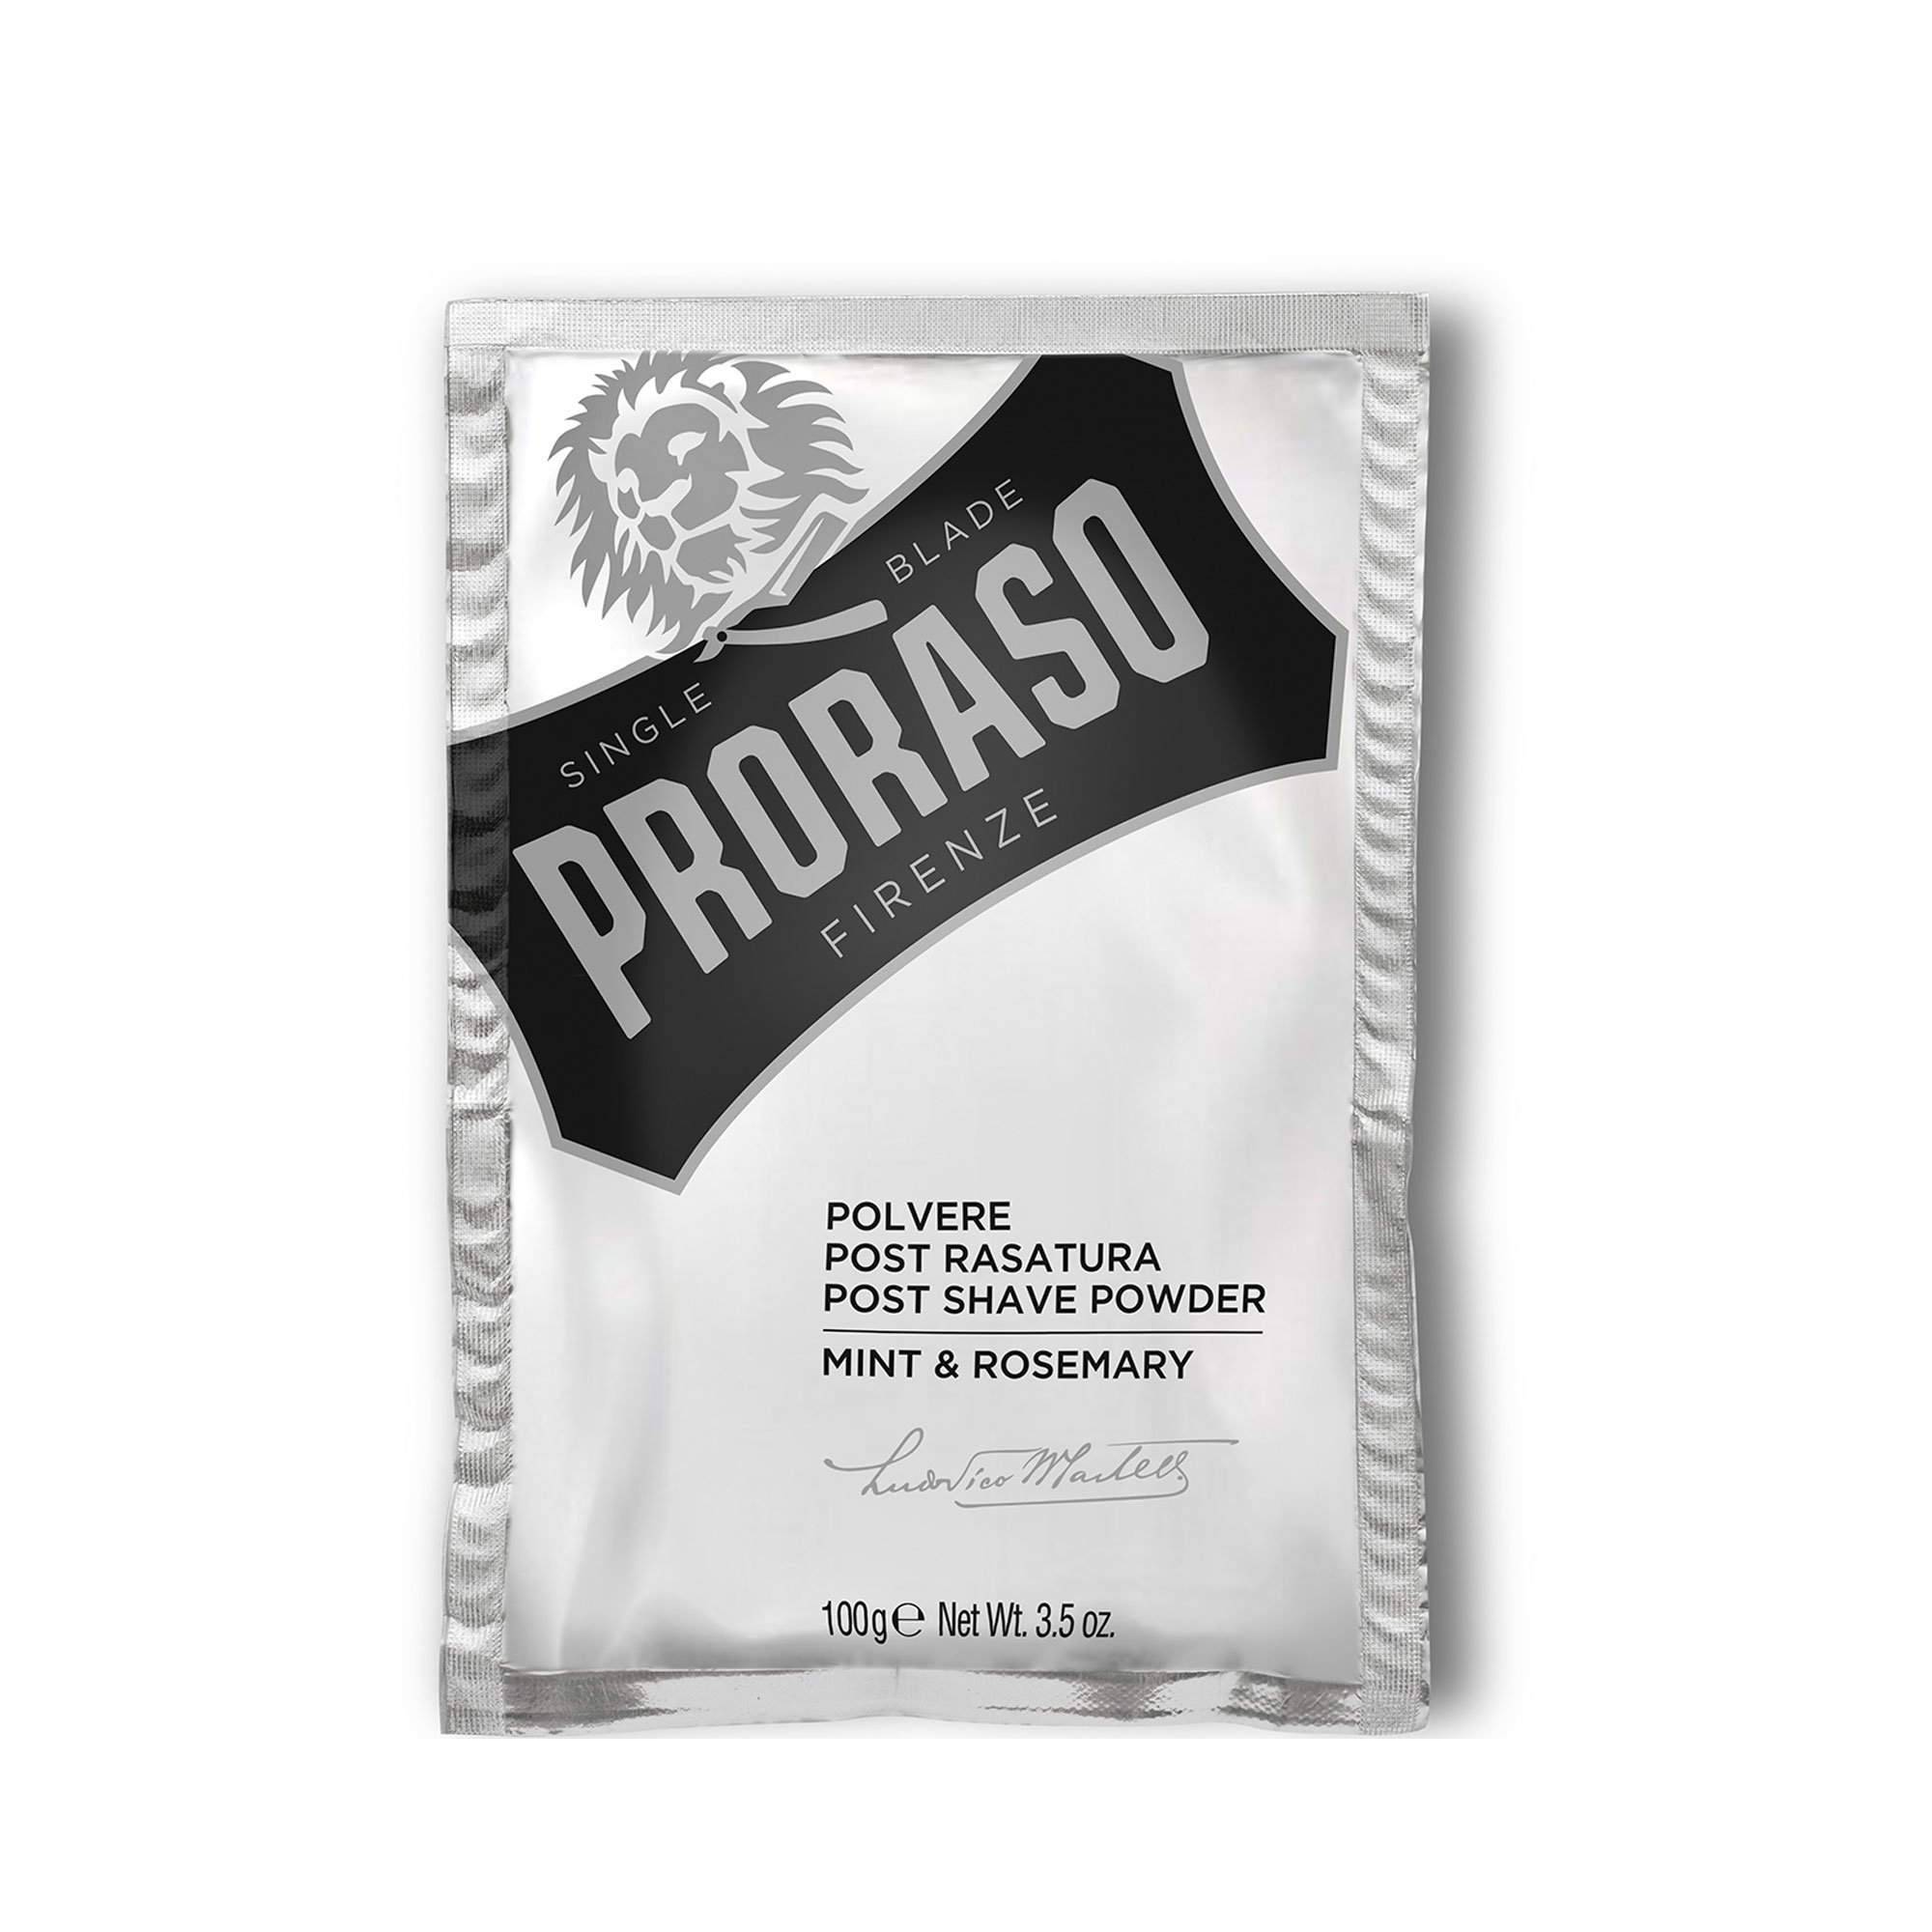 Proraso - Post Shave Powder - Mint & Rosemary - SINGLE BLADE